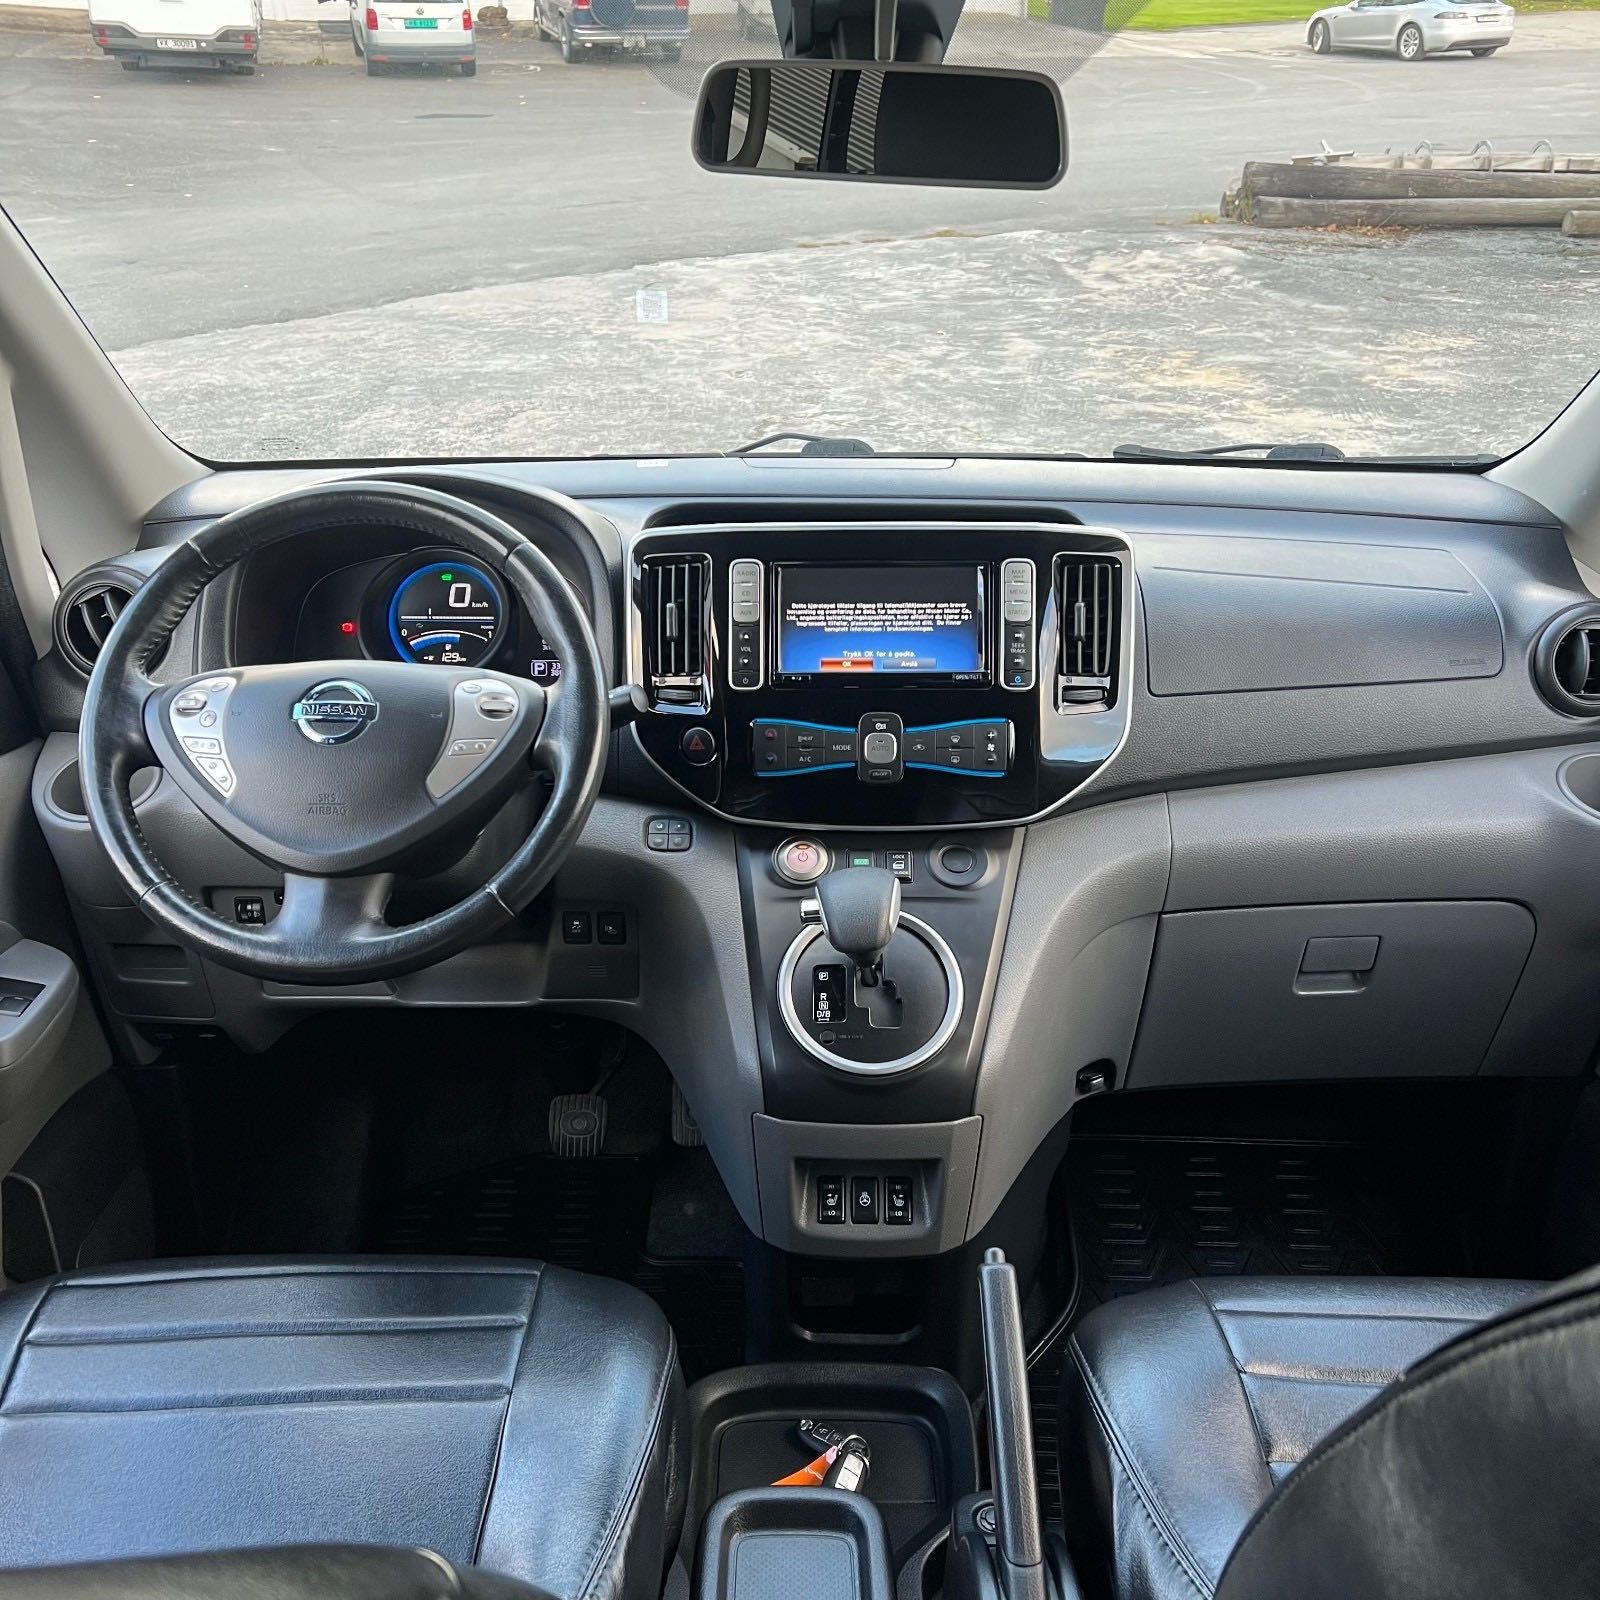 Nissan eNV200 40кВт 2019 з Норвегії